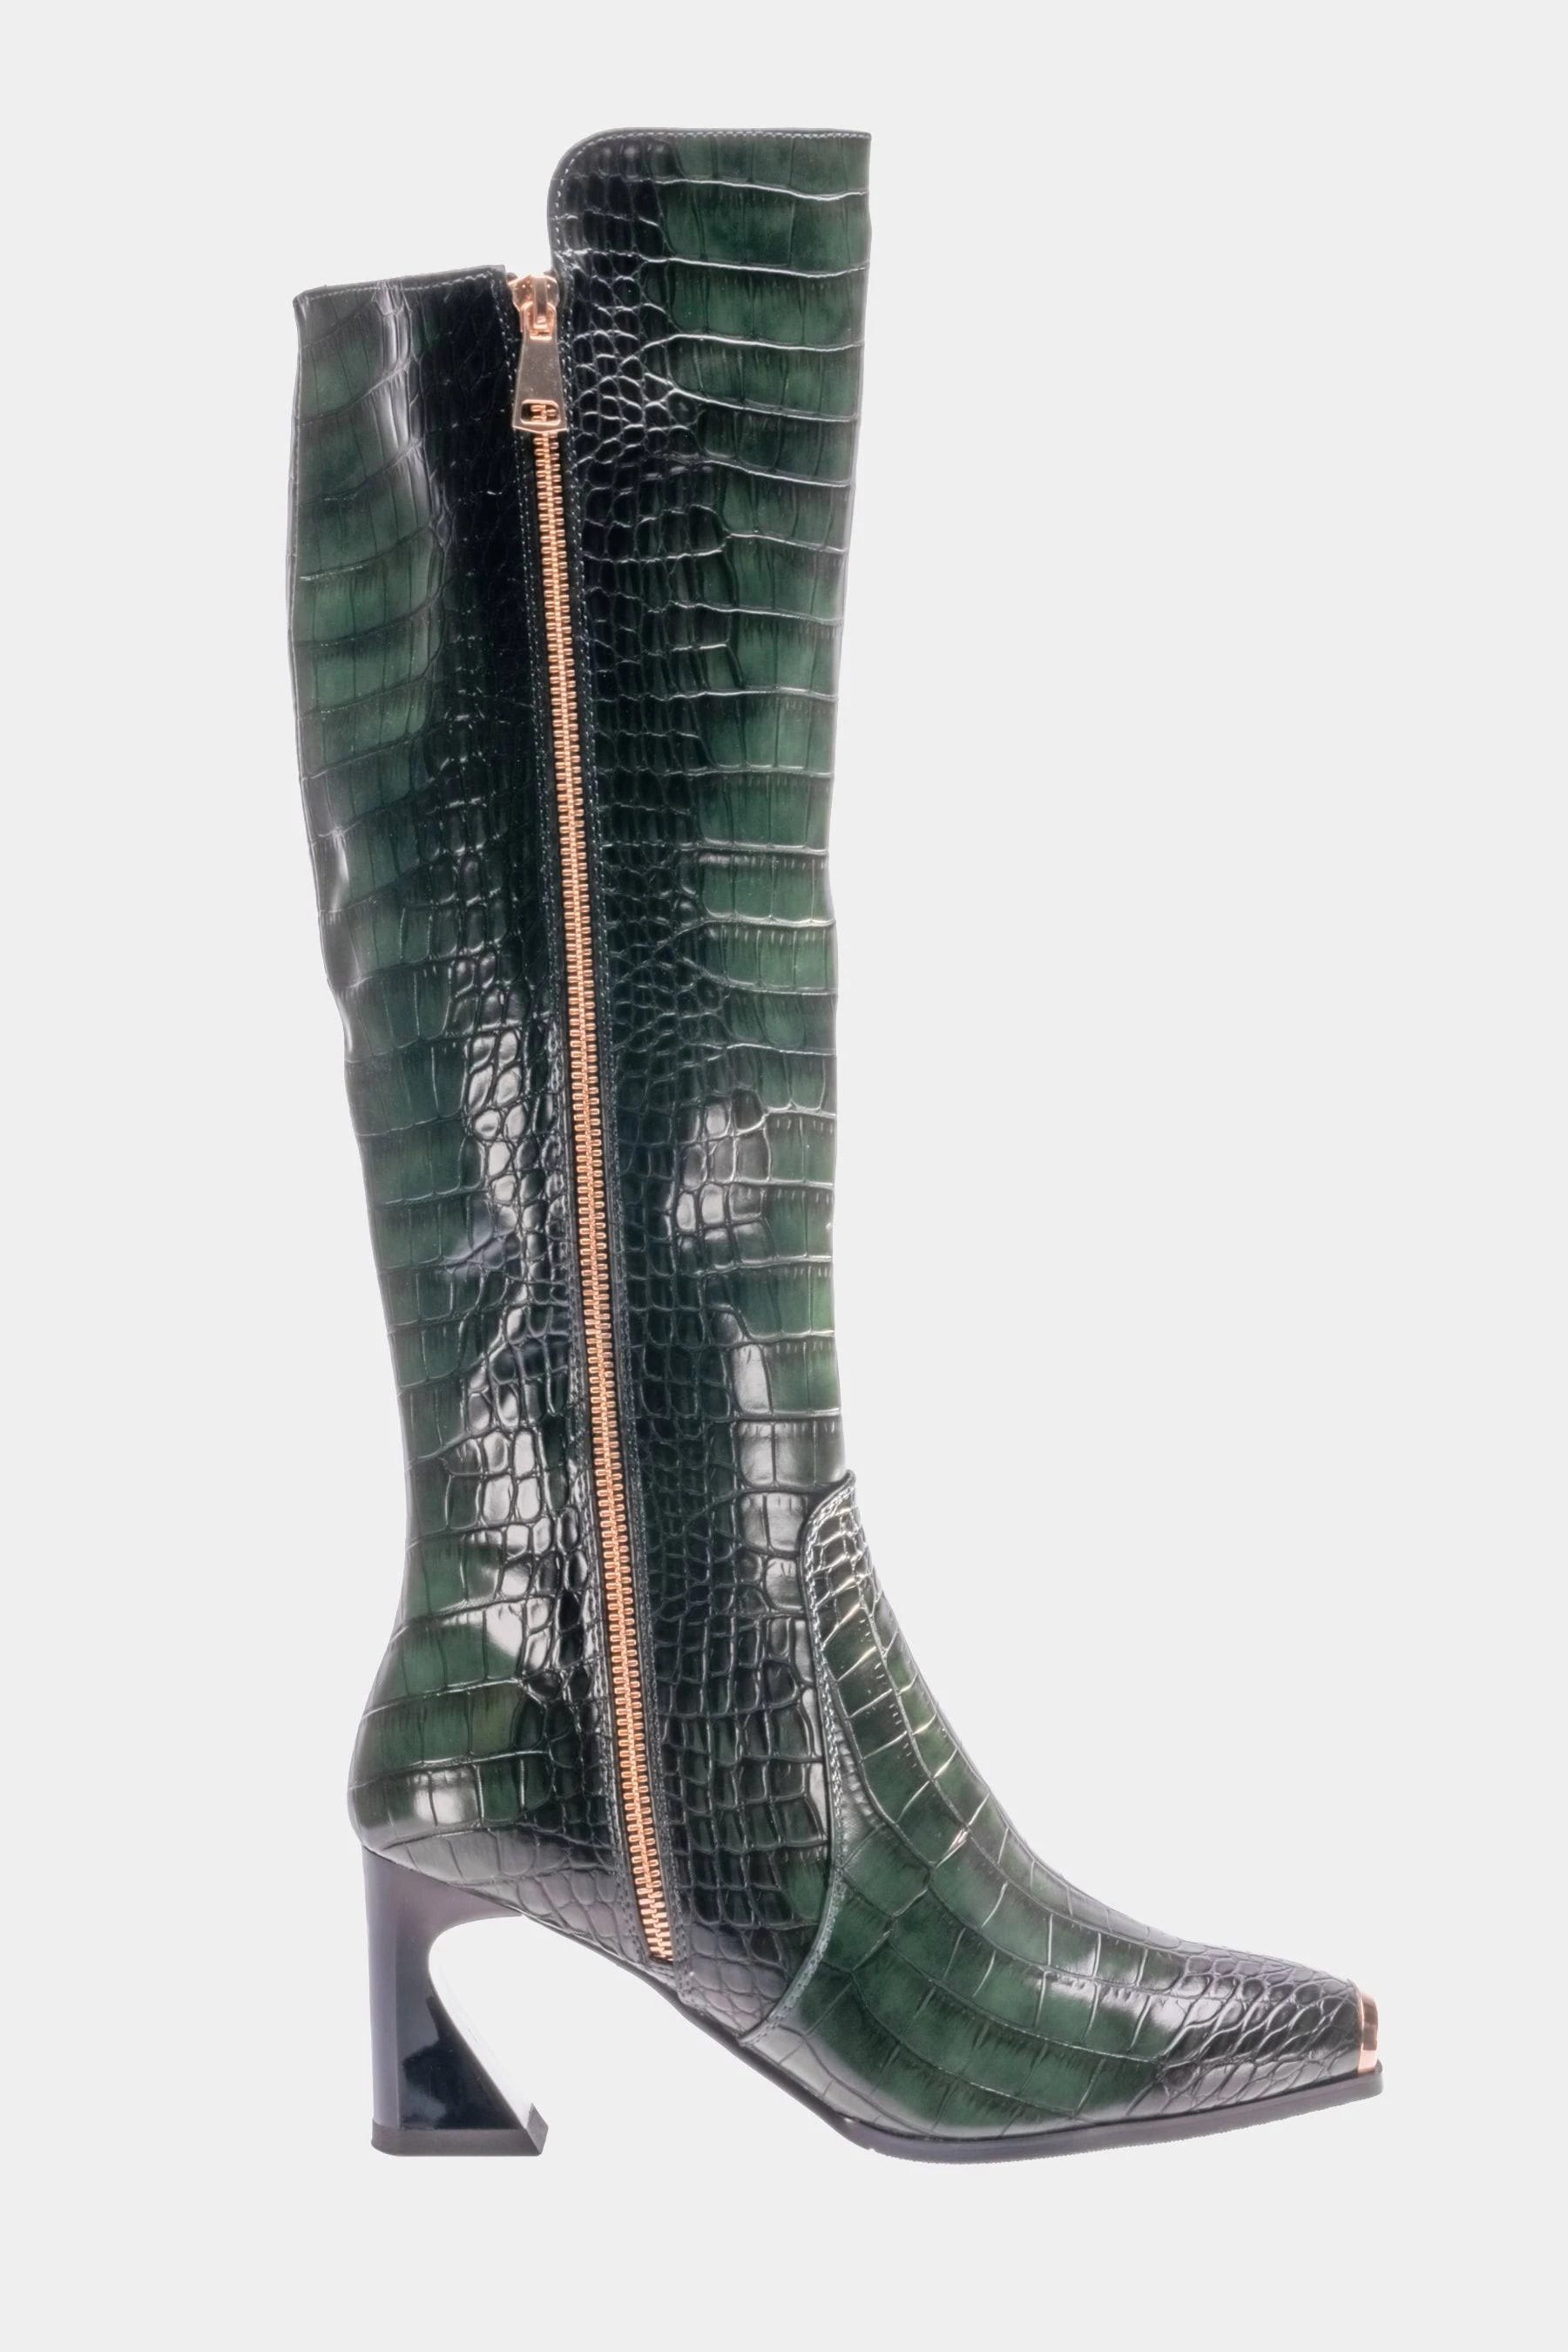 Stylish Knee-High Heel Boot with Croc Embossing | Image